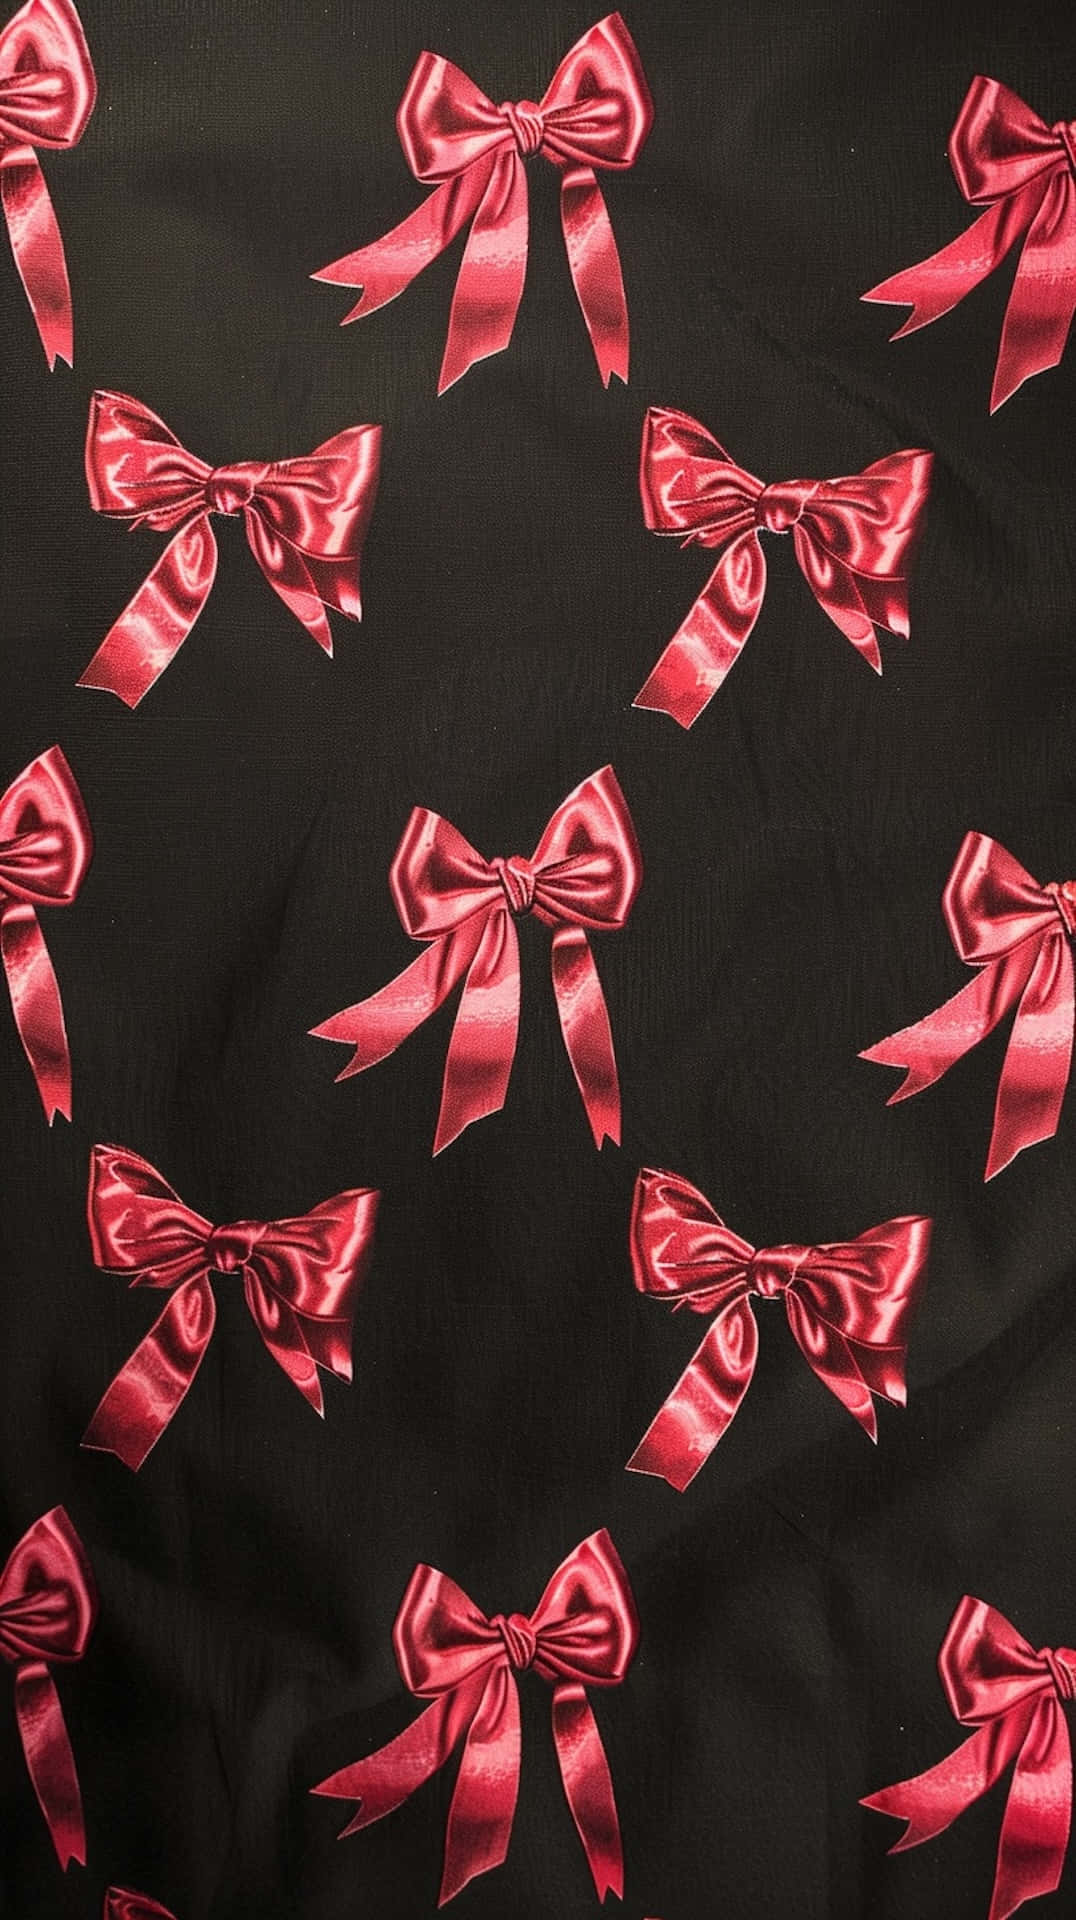 Satin Red Bowson Black Fabric Wallpaper